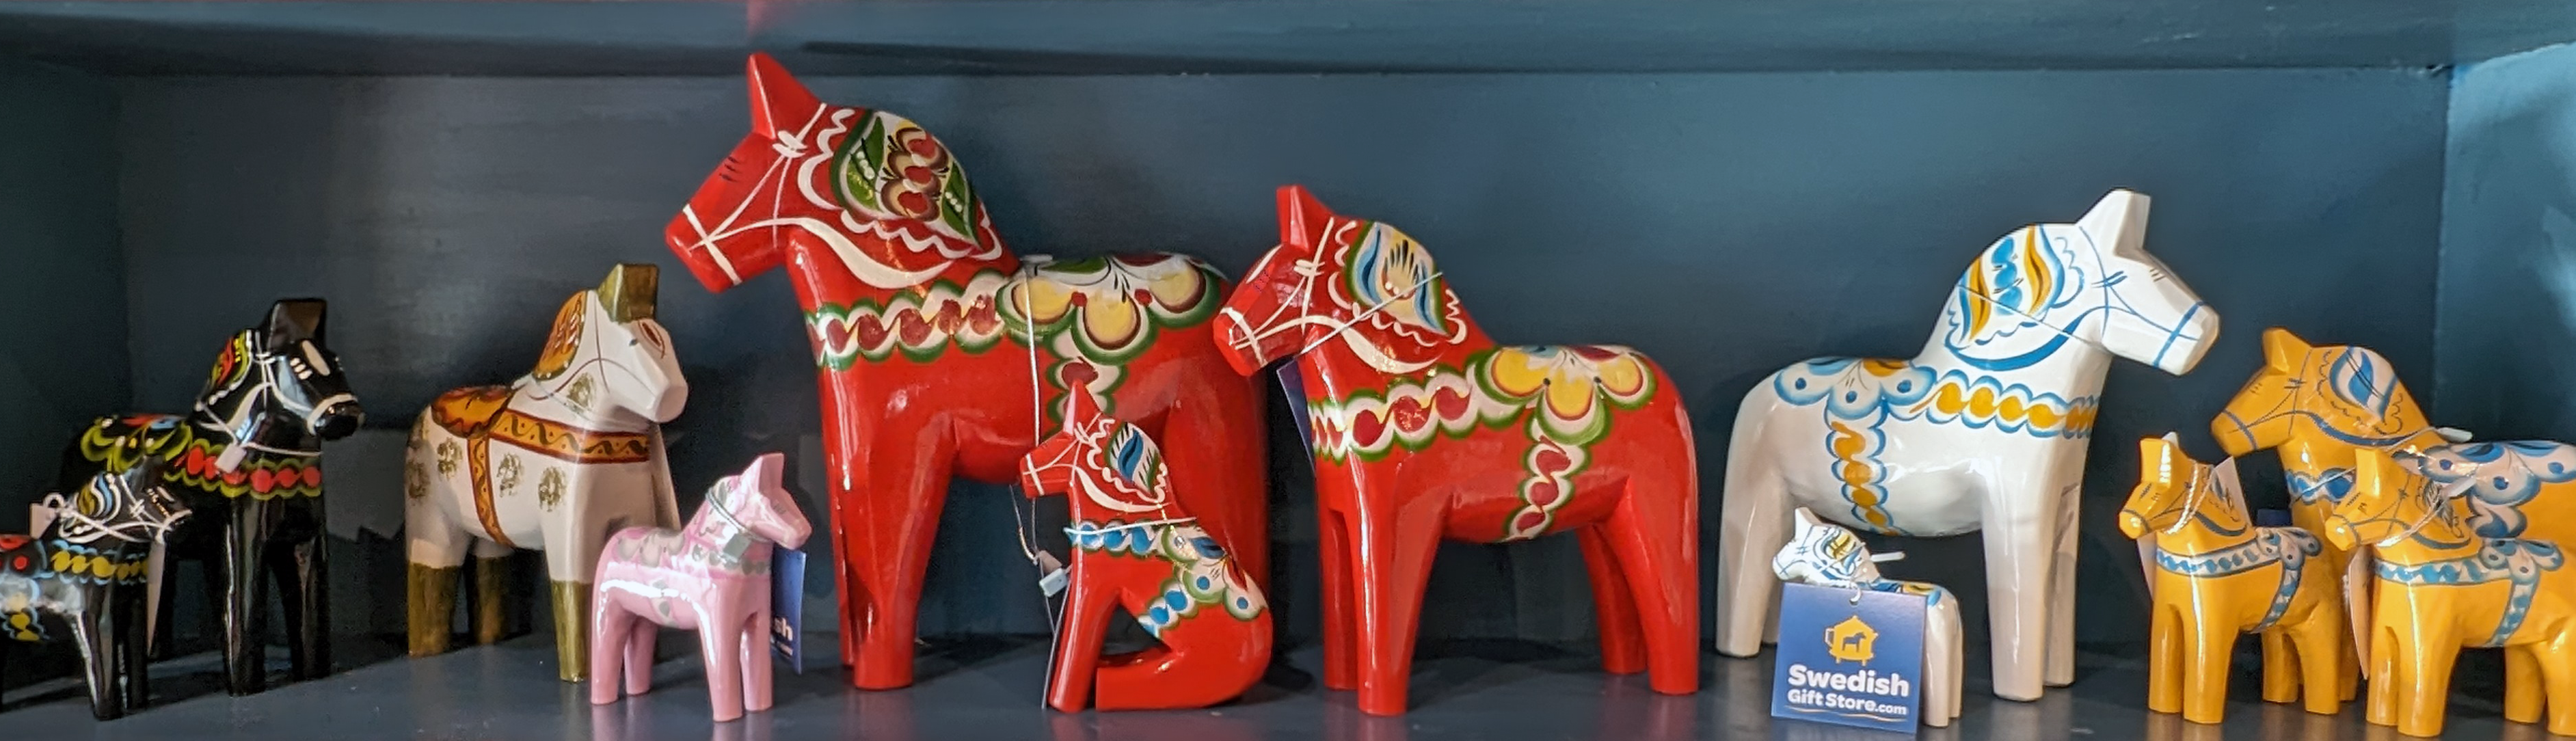 Decor: Figurines - Dala Horses